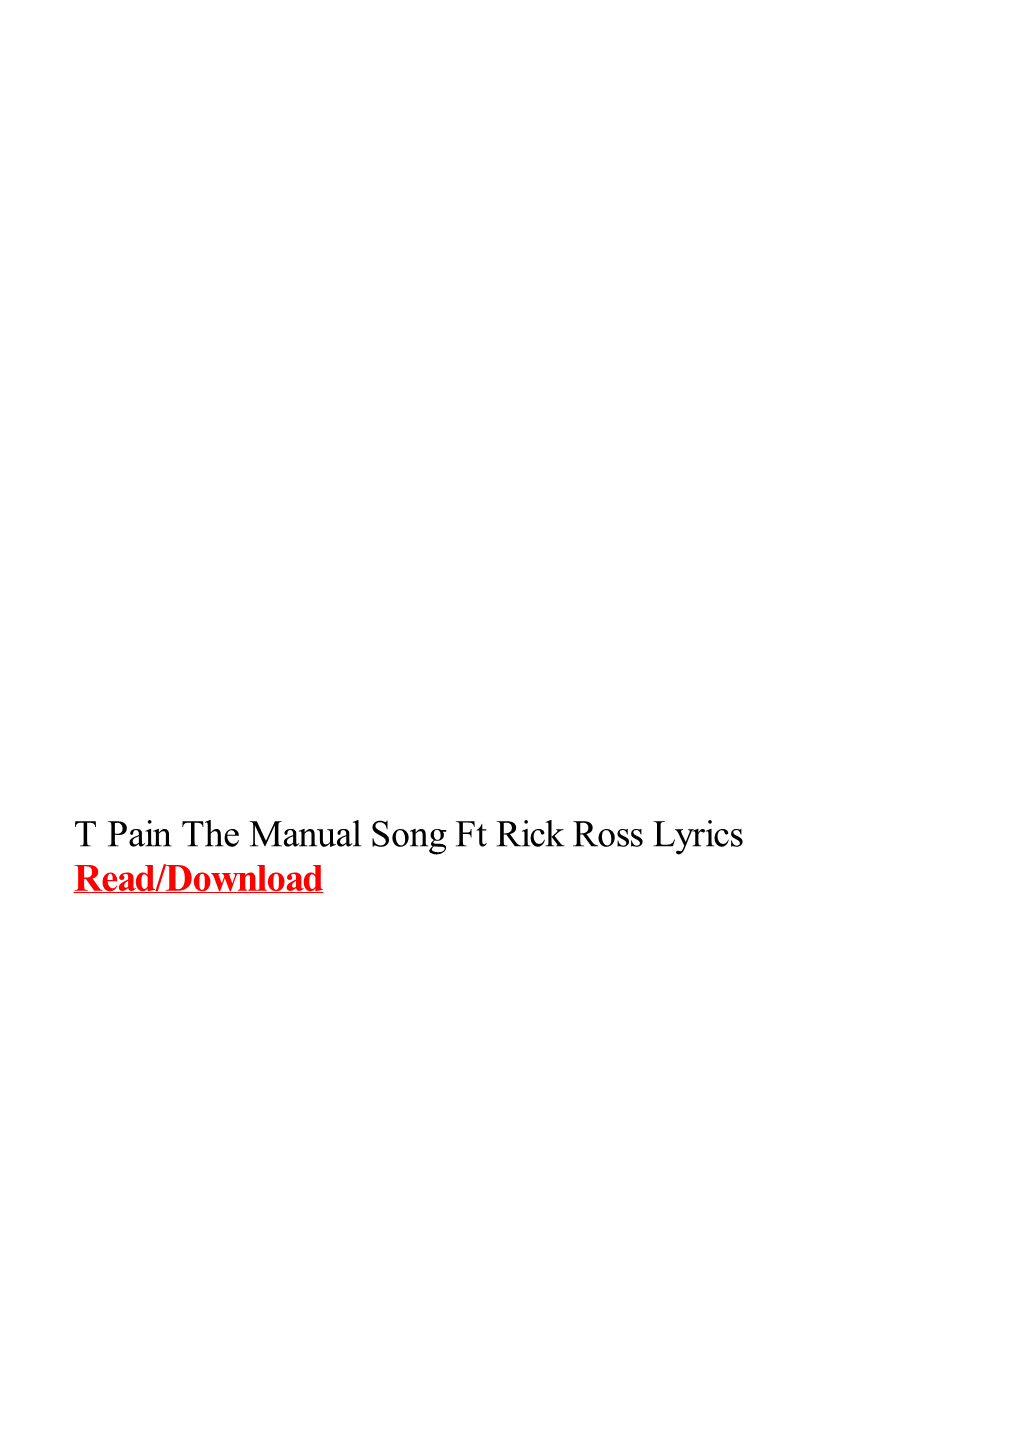 T Pain the Manual Song Ft Rick Ross Lyrics